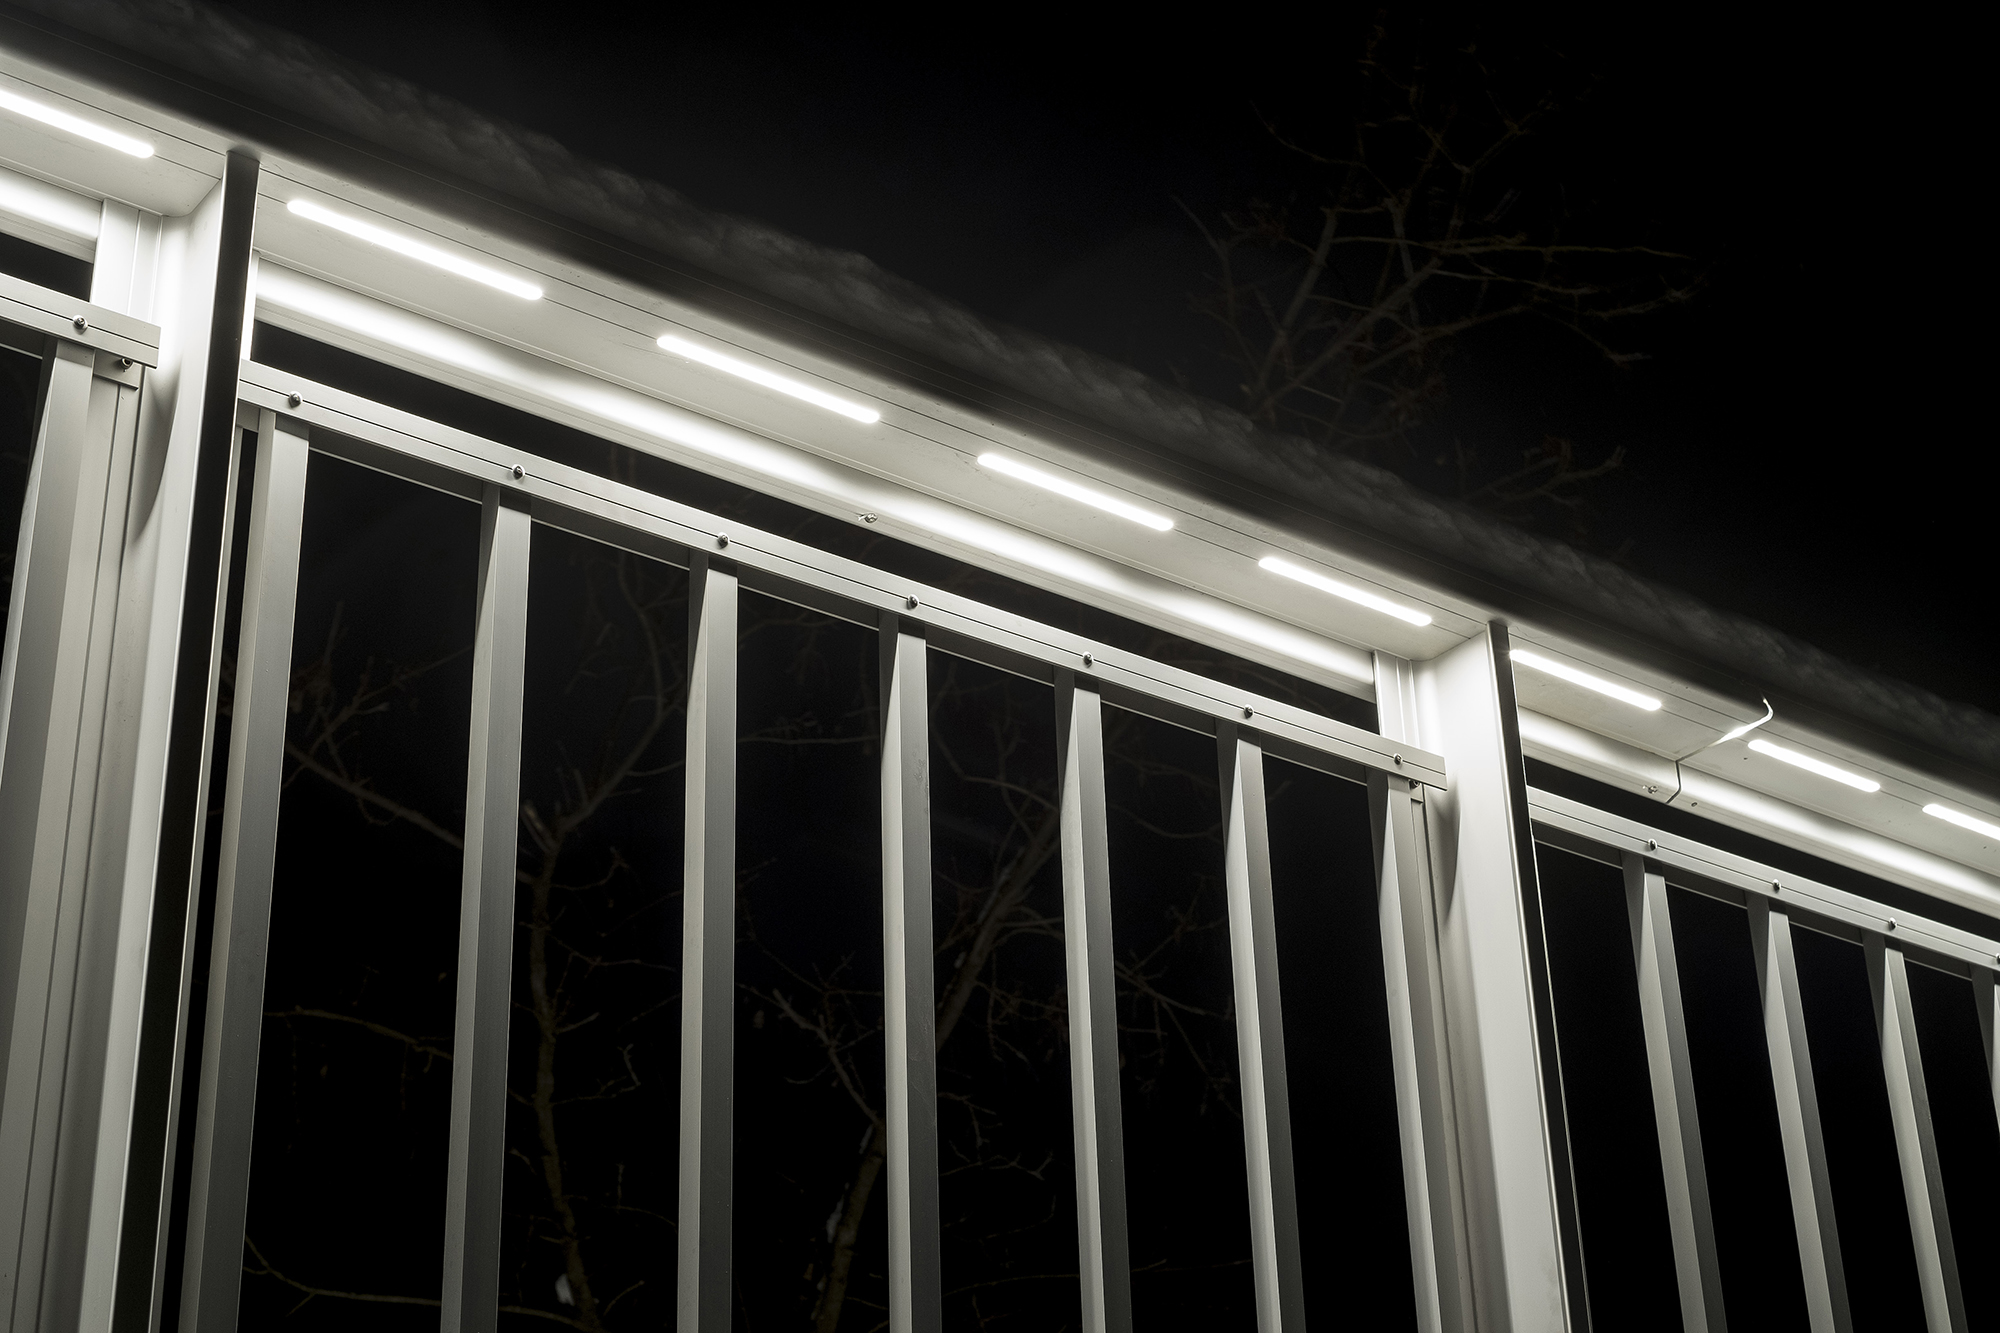 Lighting system built into guardrails for weld-free aluminum bridge decking